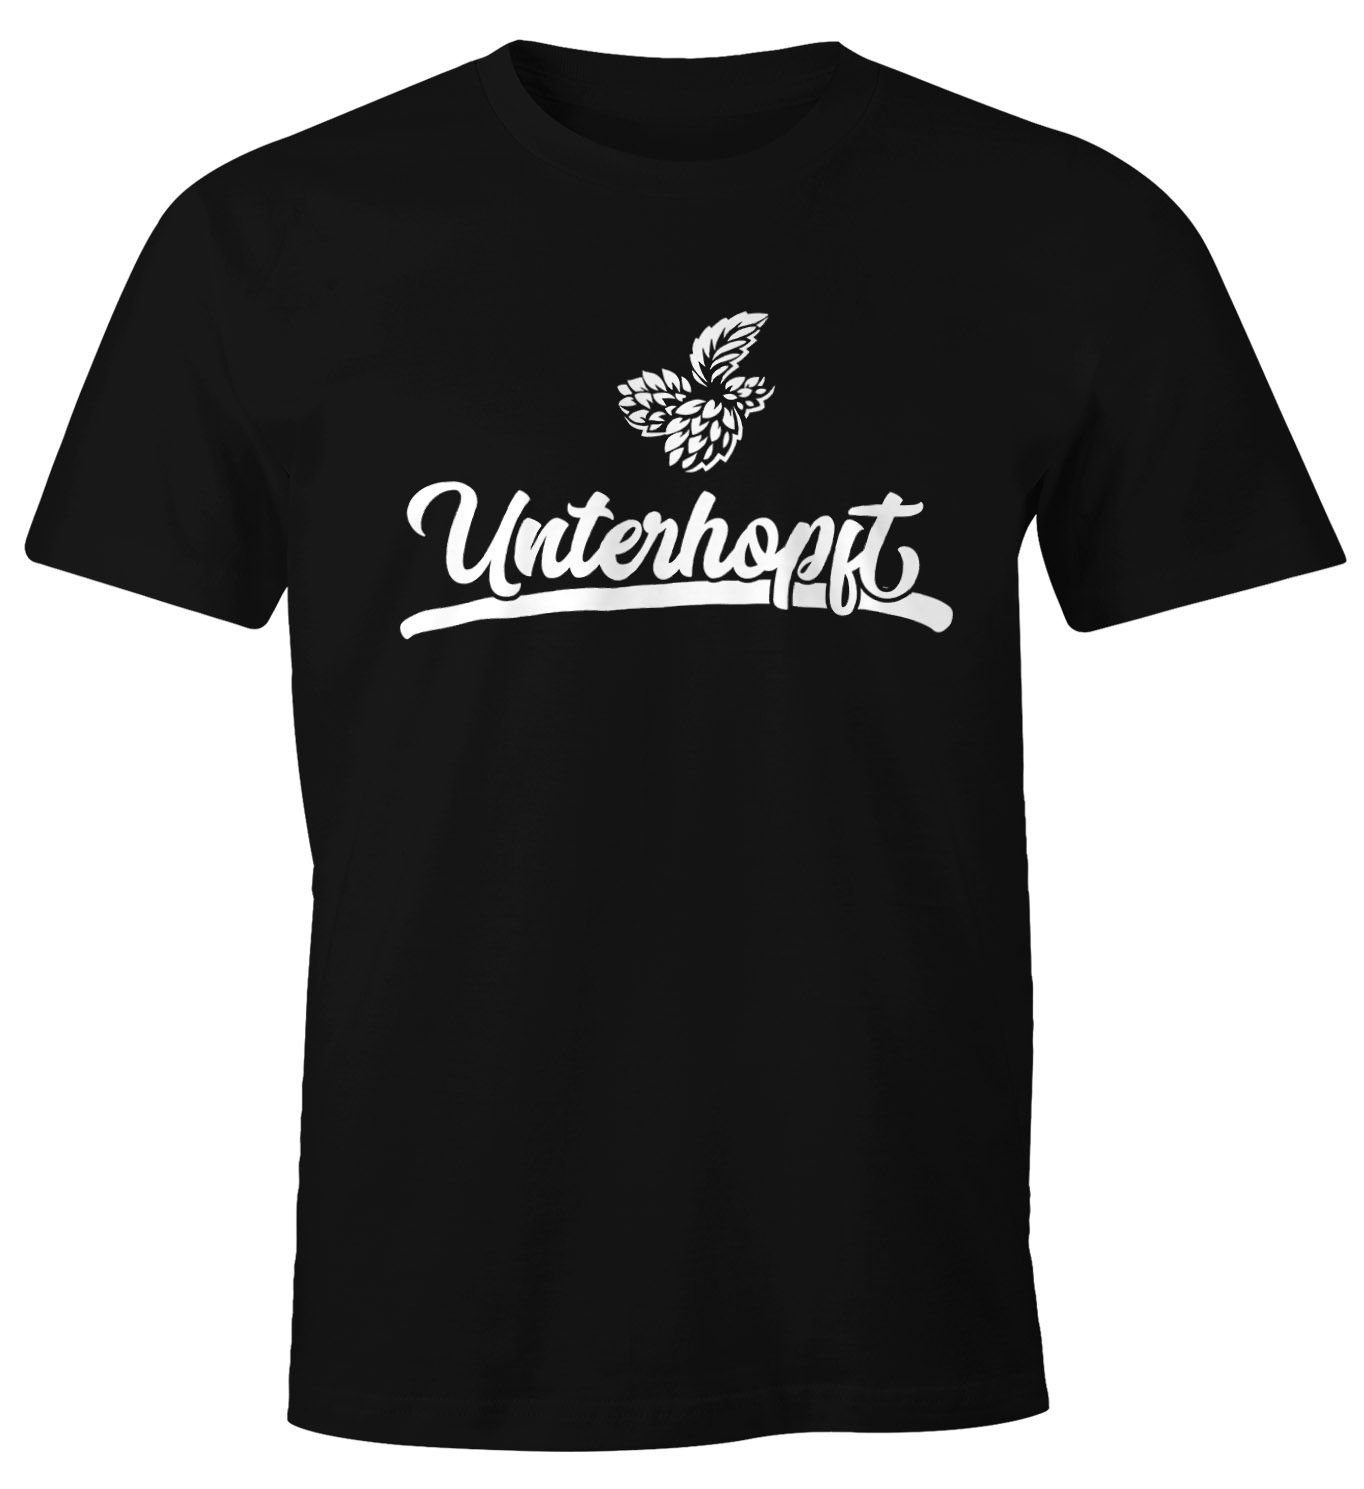 MoonWorks Print-Shirt Herren Party T-Shirt Unterhopft Bier Fun-Shirt Moonworks® mit Print schwarz